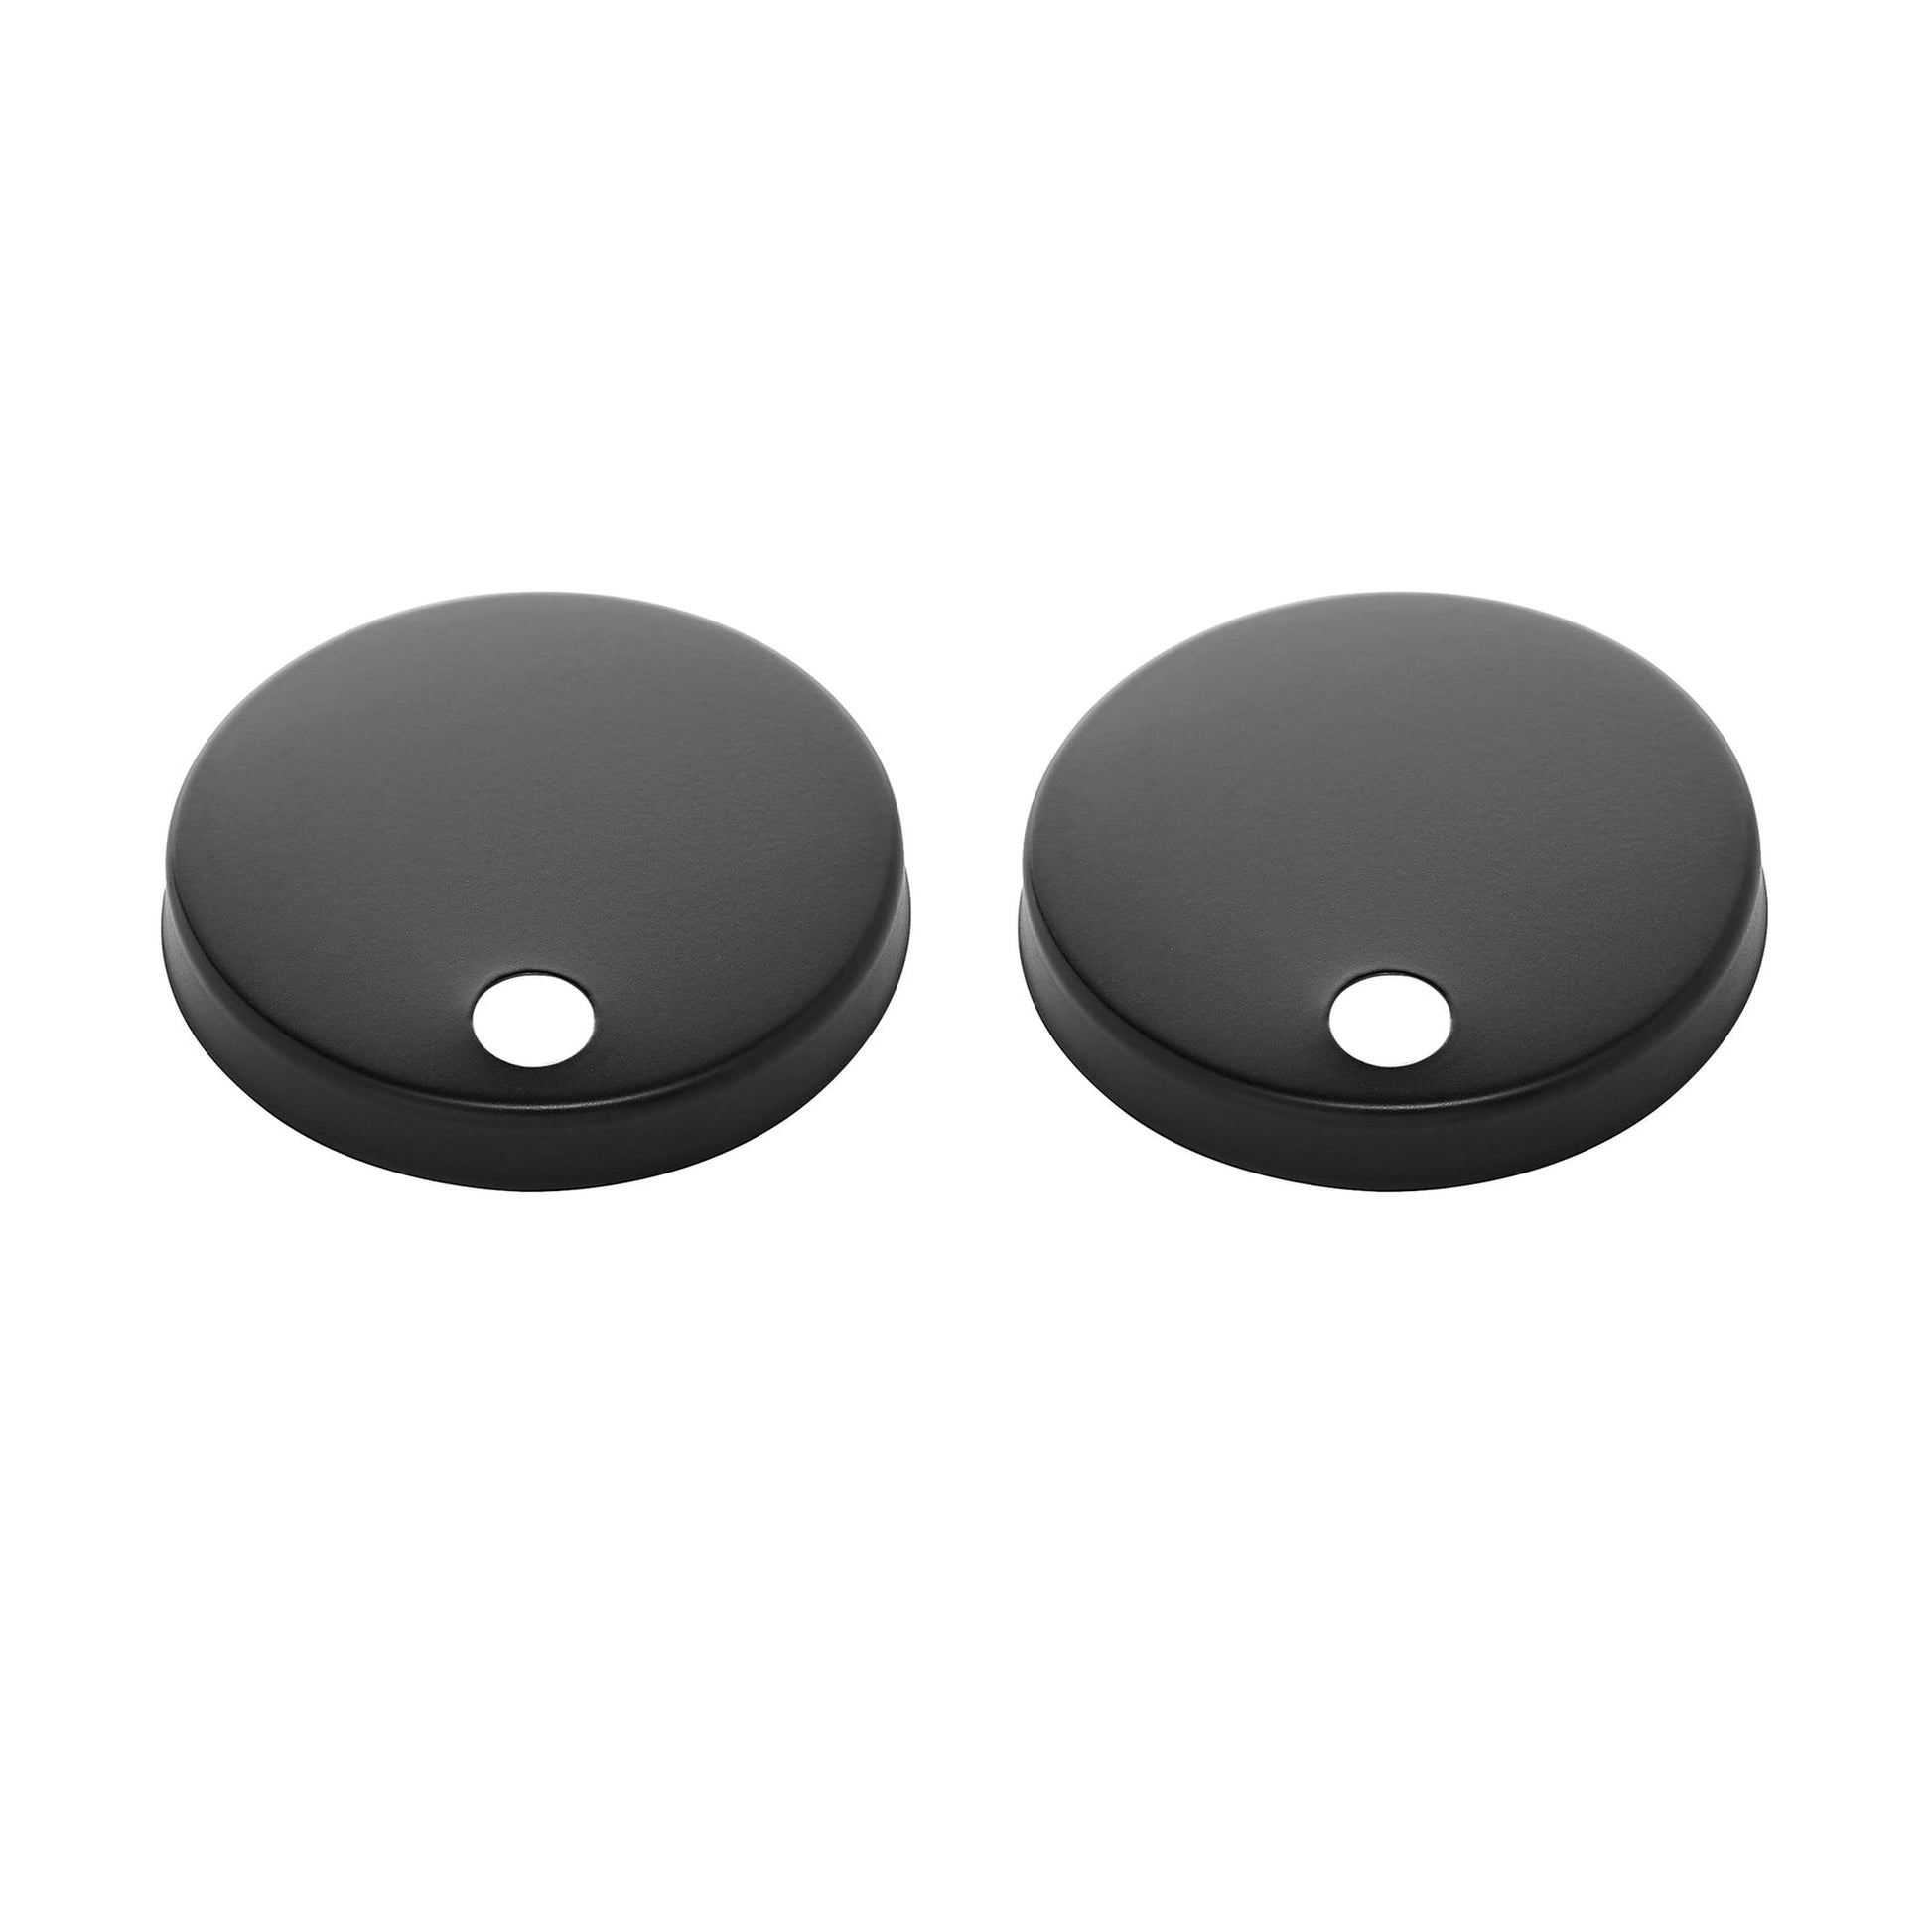 Swiss Madison Rectangular Black Toilet Push Buttons With QQ Feet